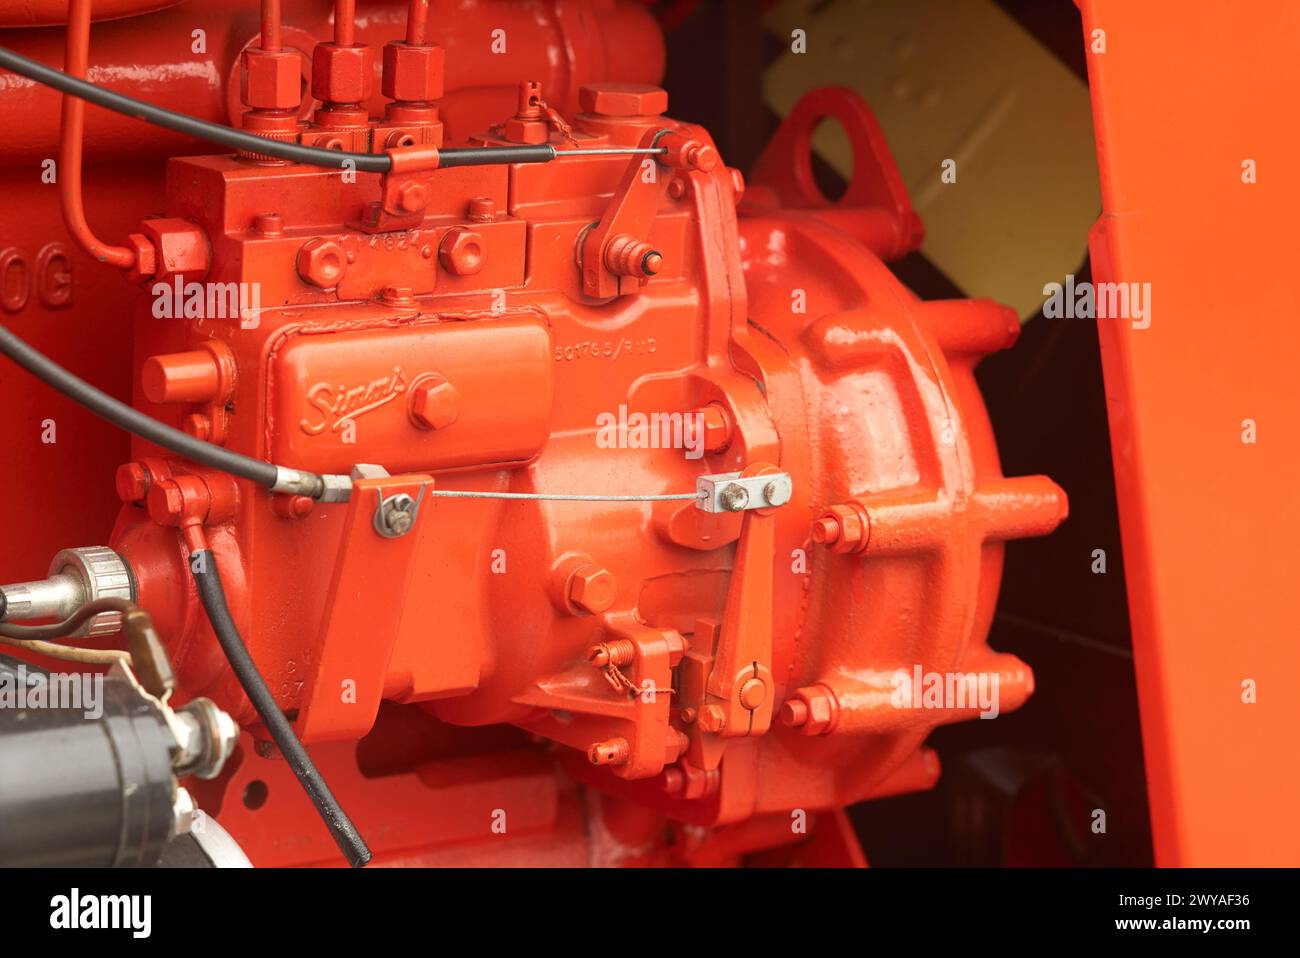 Orange Simms Engine Stock Photo